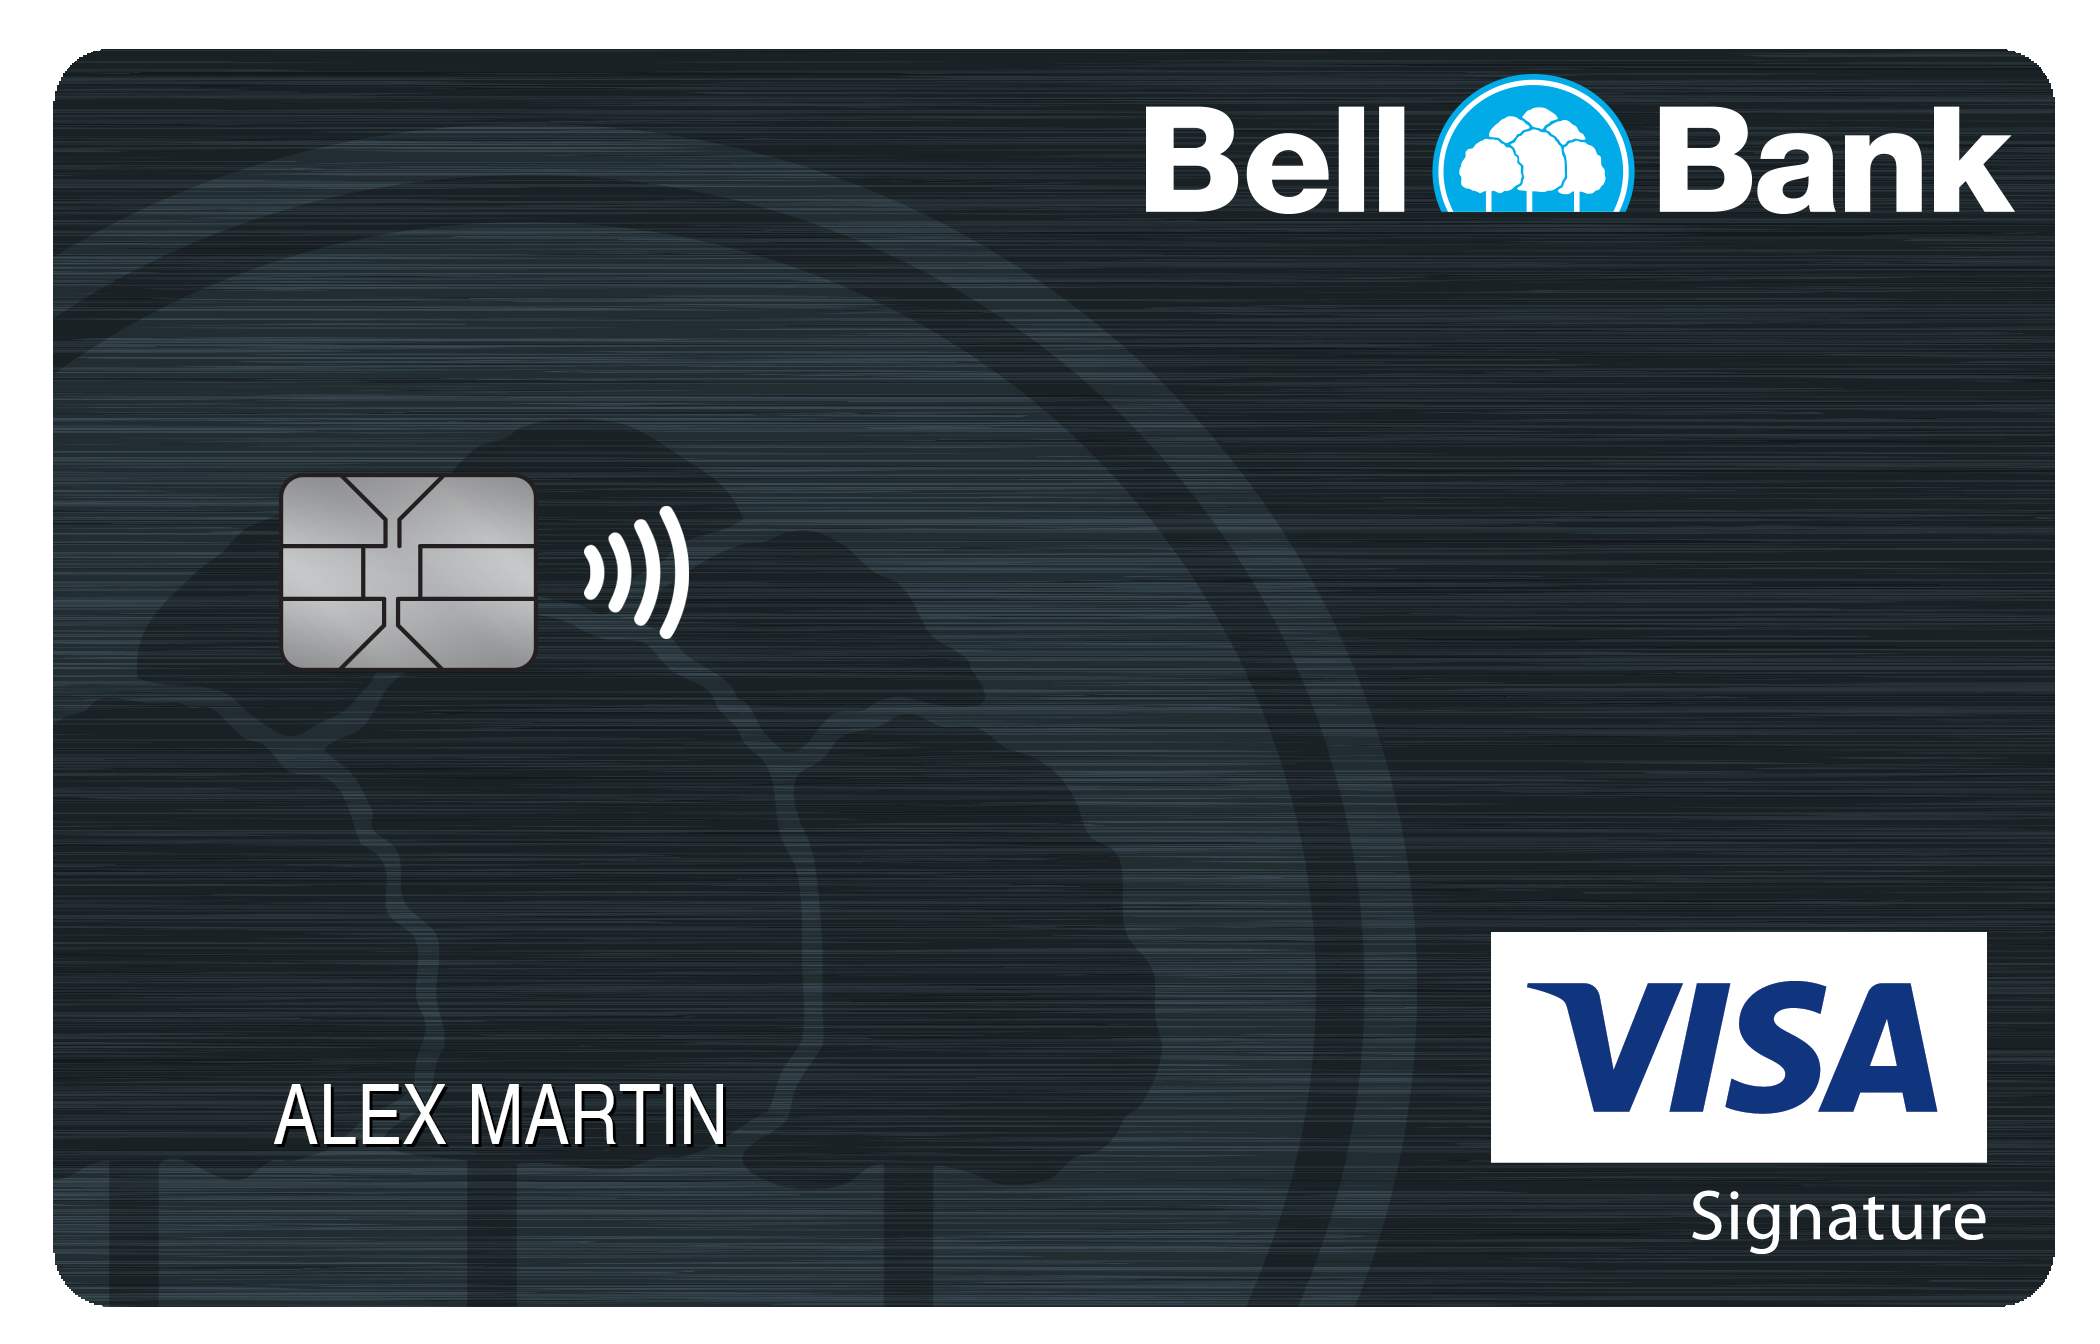 Bell Bank Travel Rewards+ Card